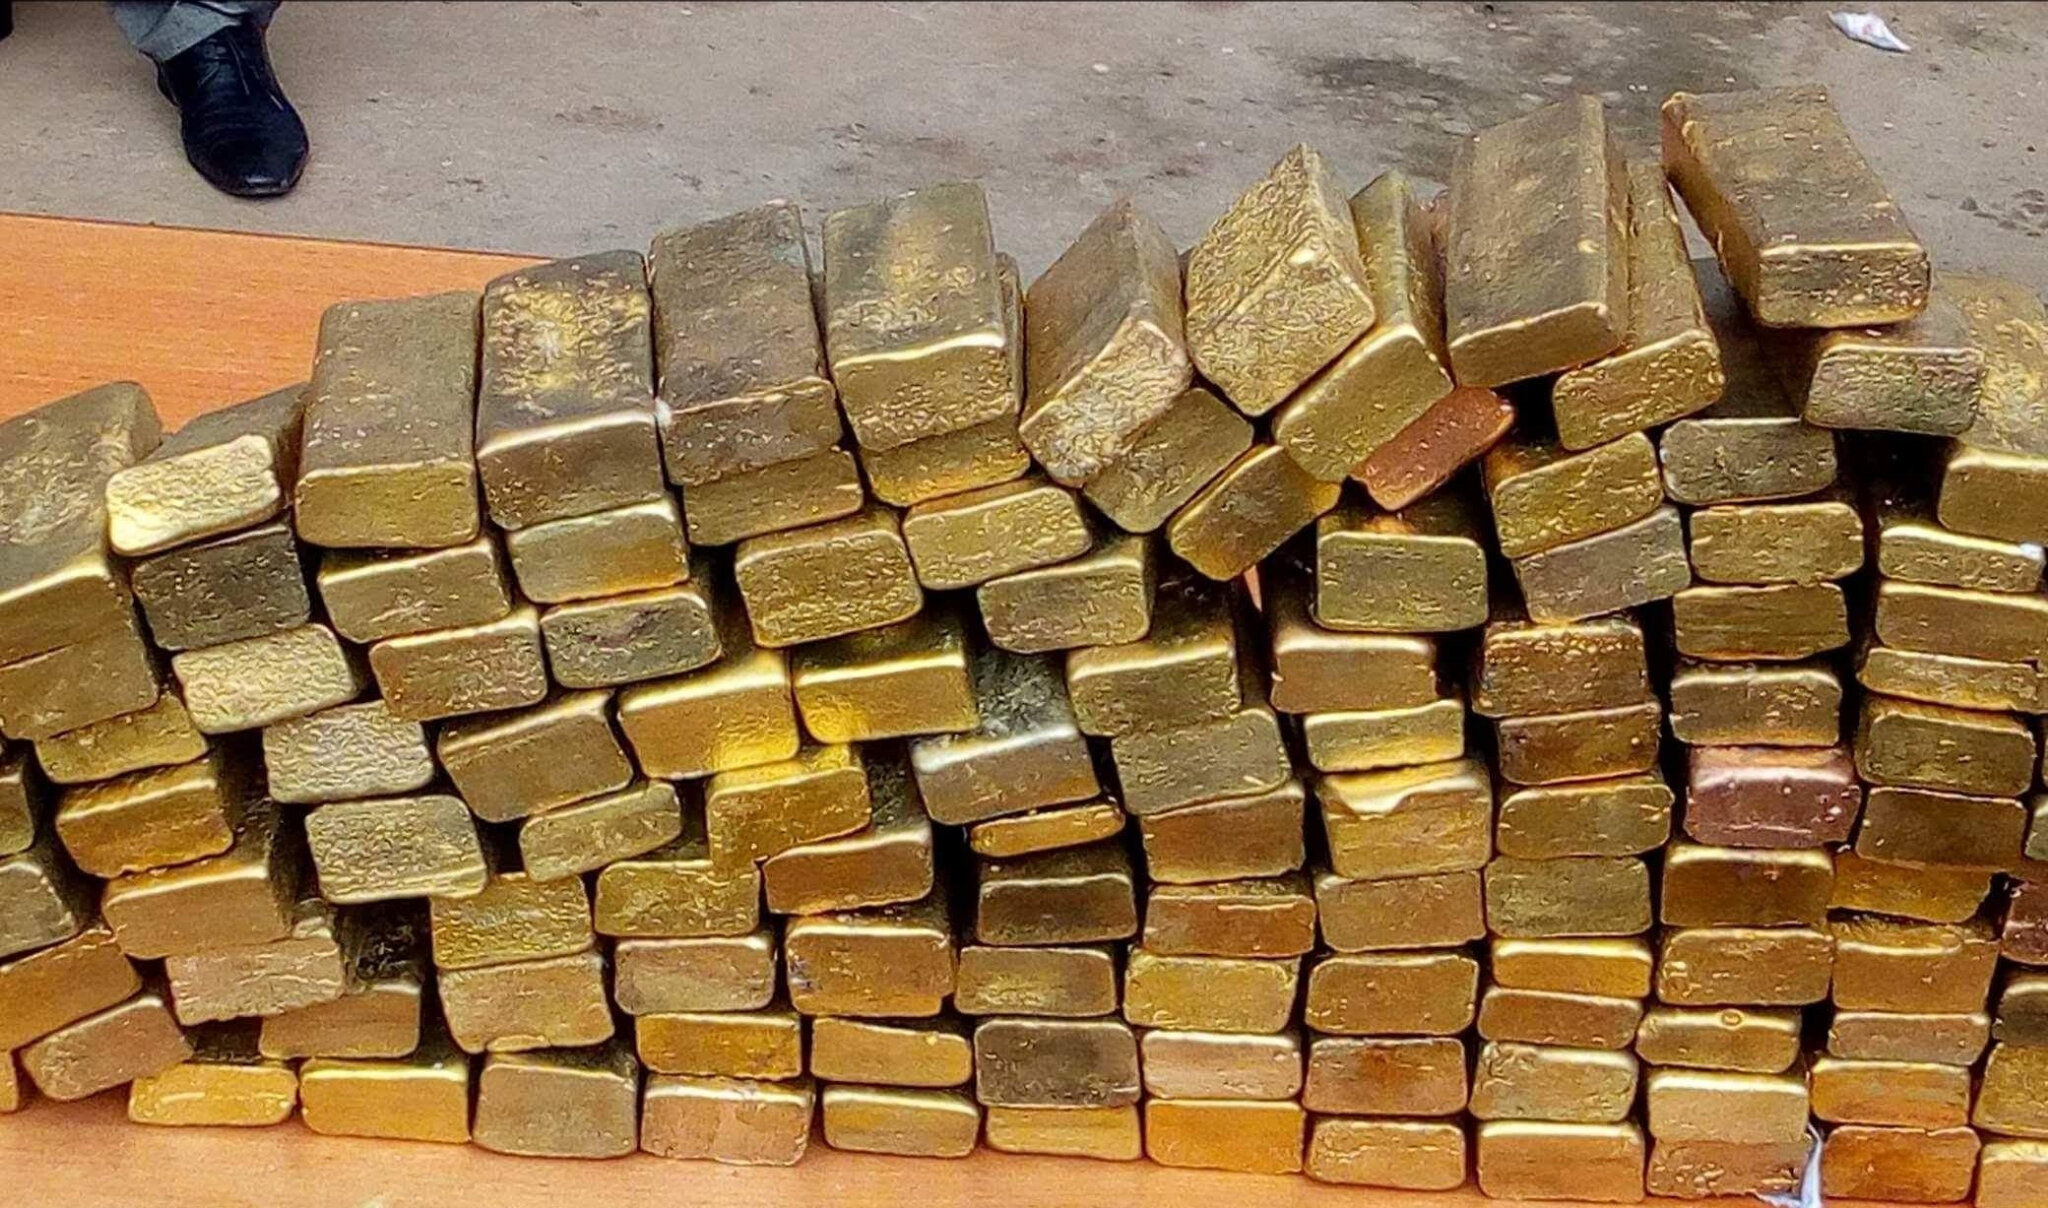 Recherche achat or en poudre - Sale of gold in powder and gold ingot in Italy, Switzerland